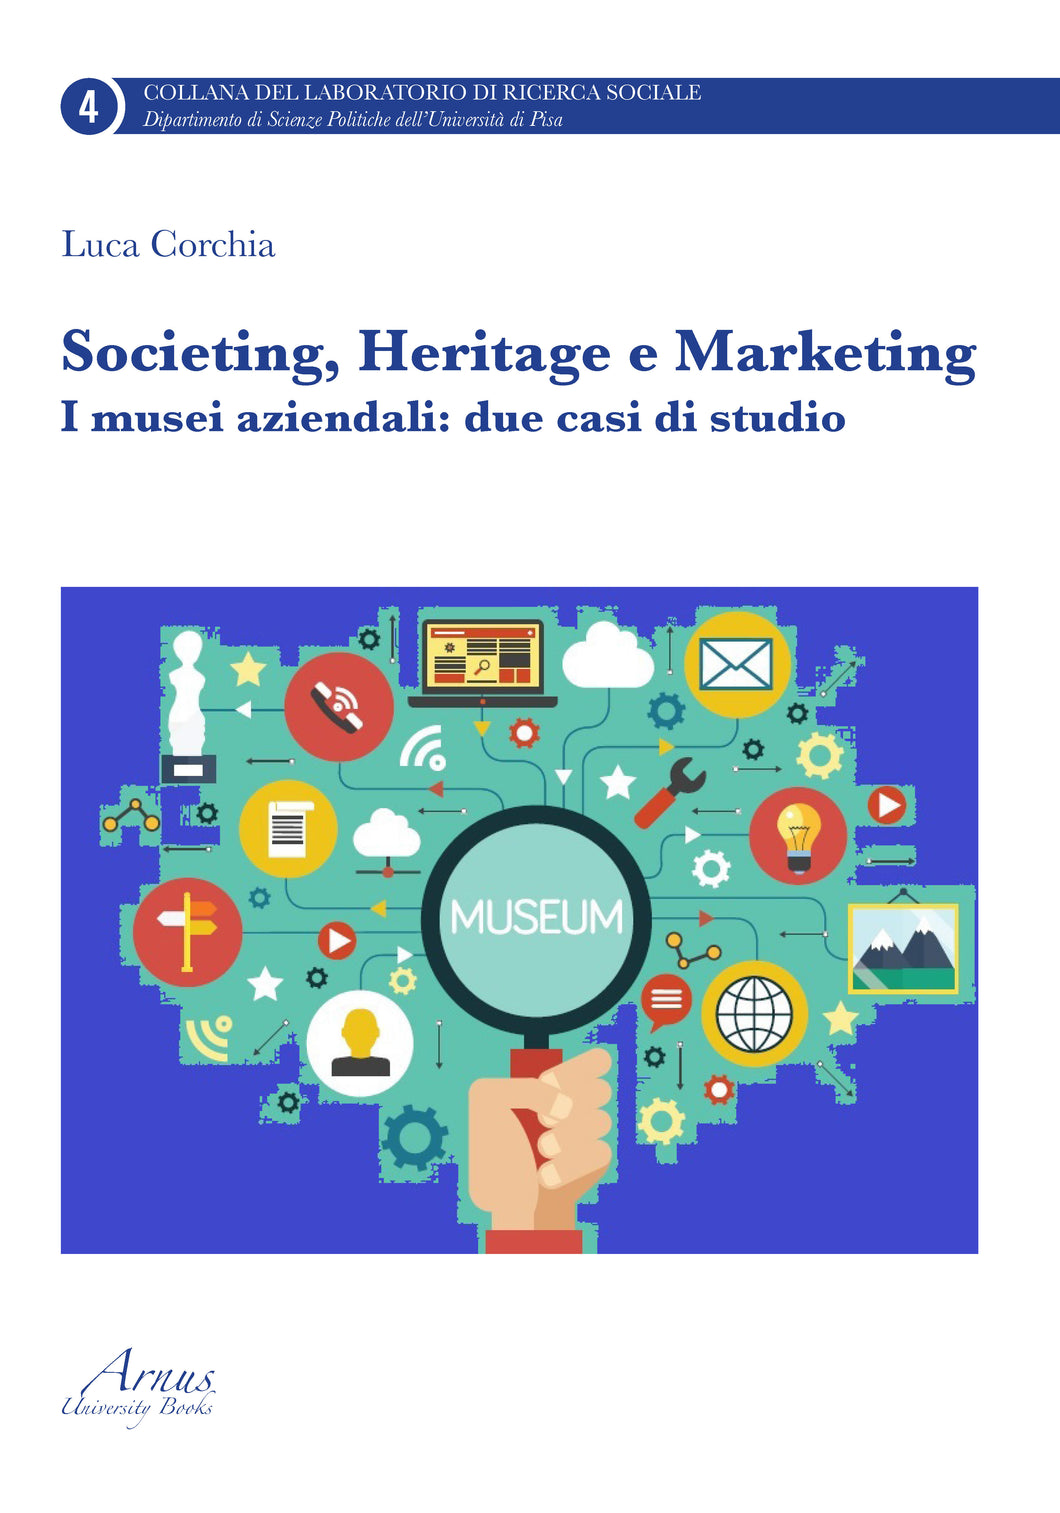 Societing, Heritage e Marketing